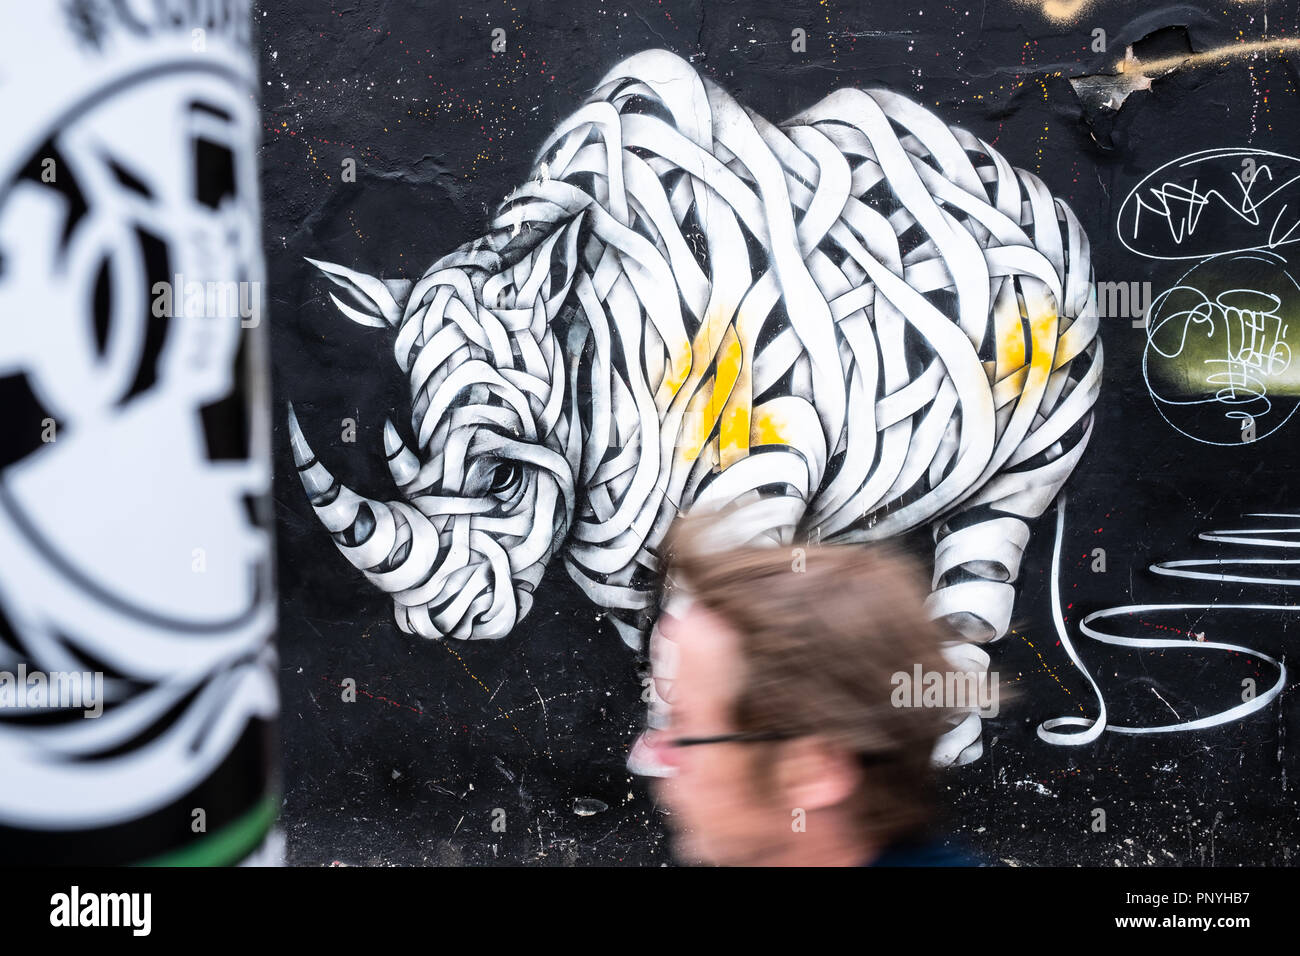 Rhino graffiti in London UK Stock Photo